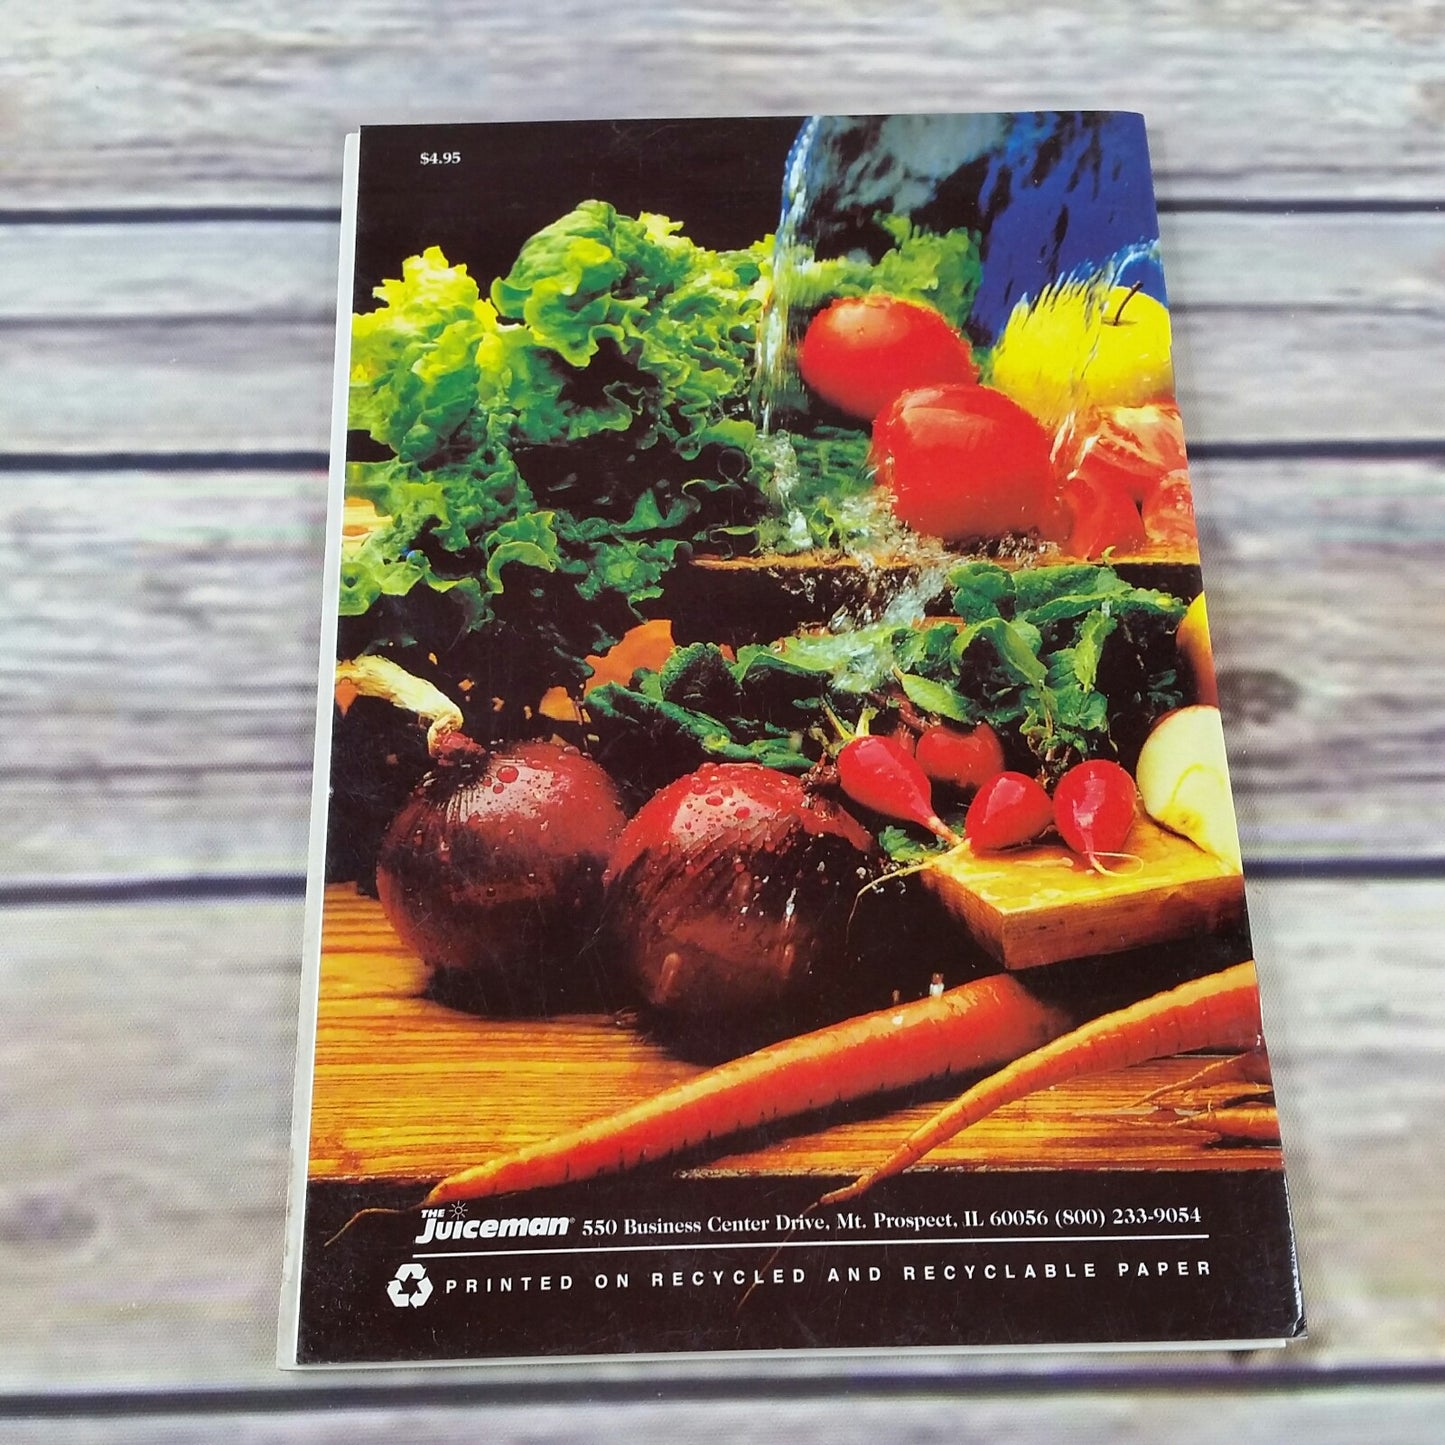 Vintage Cookbook The Juiceman Fresh Juice Recipes and Menu Planner Paperback Booklet - At Grandma's Table